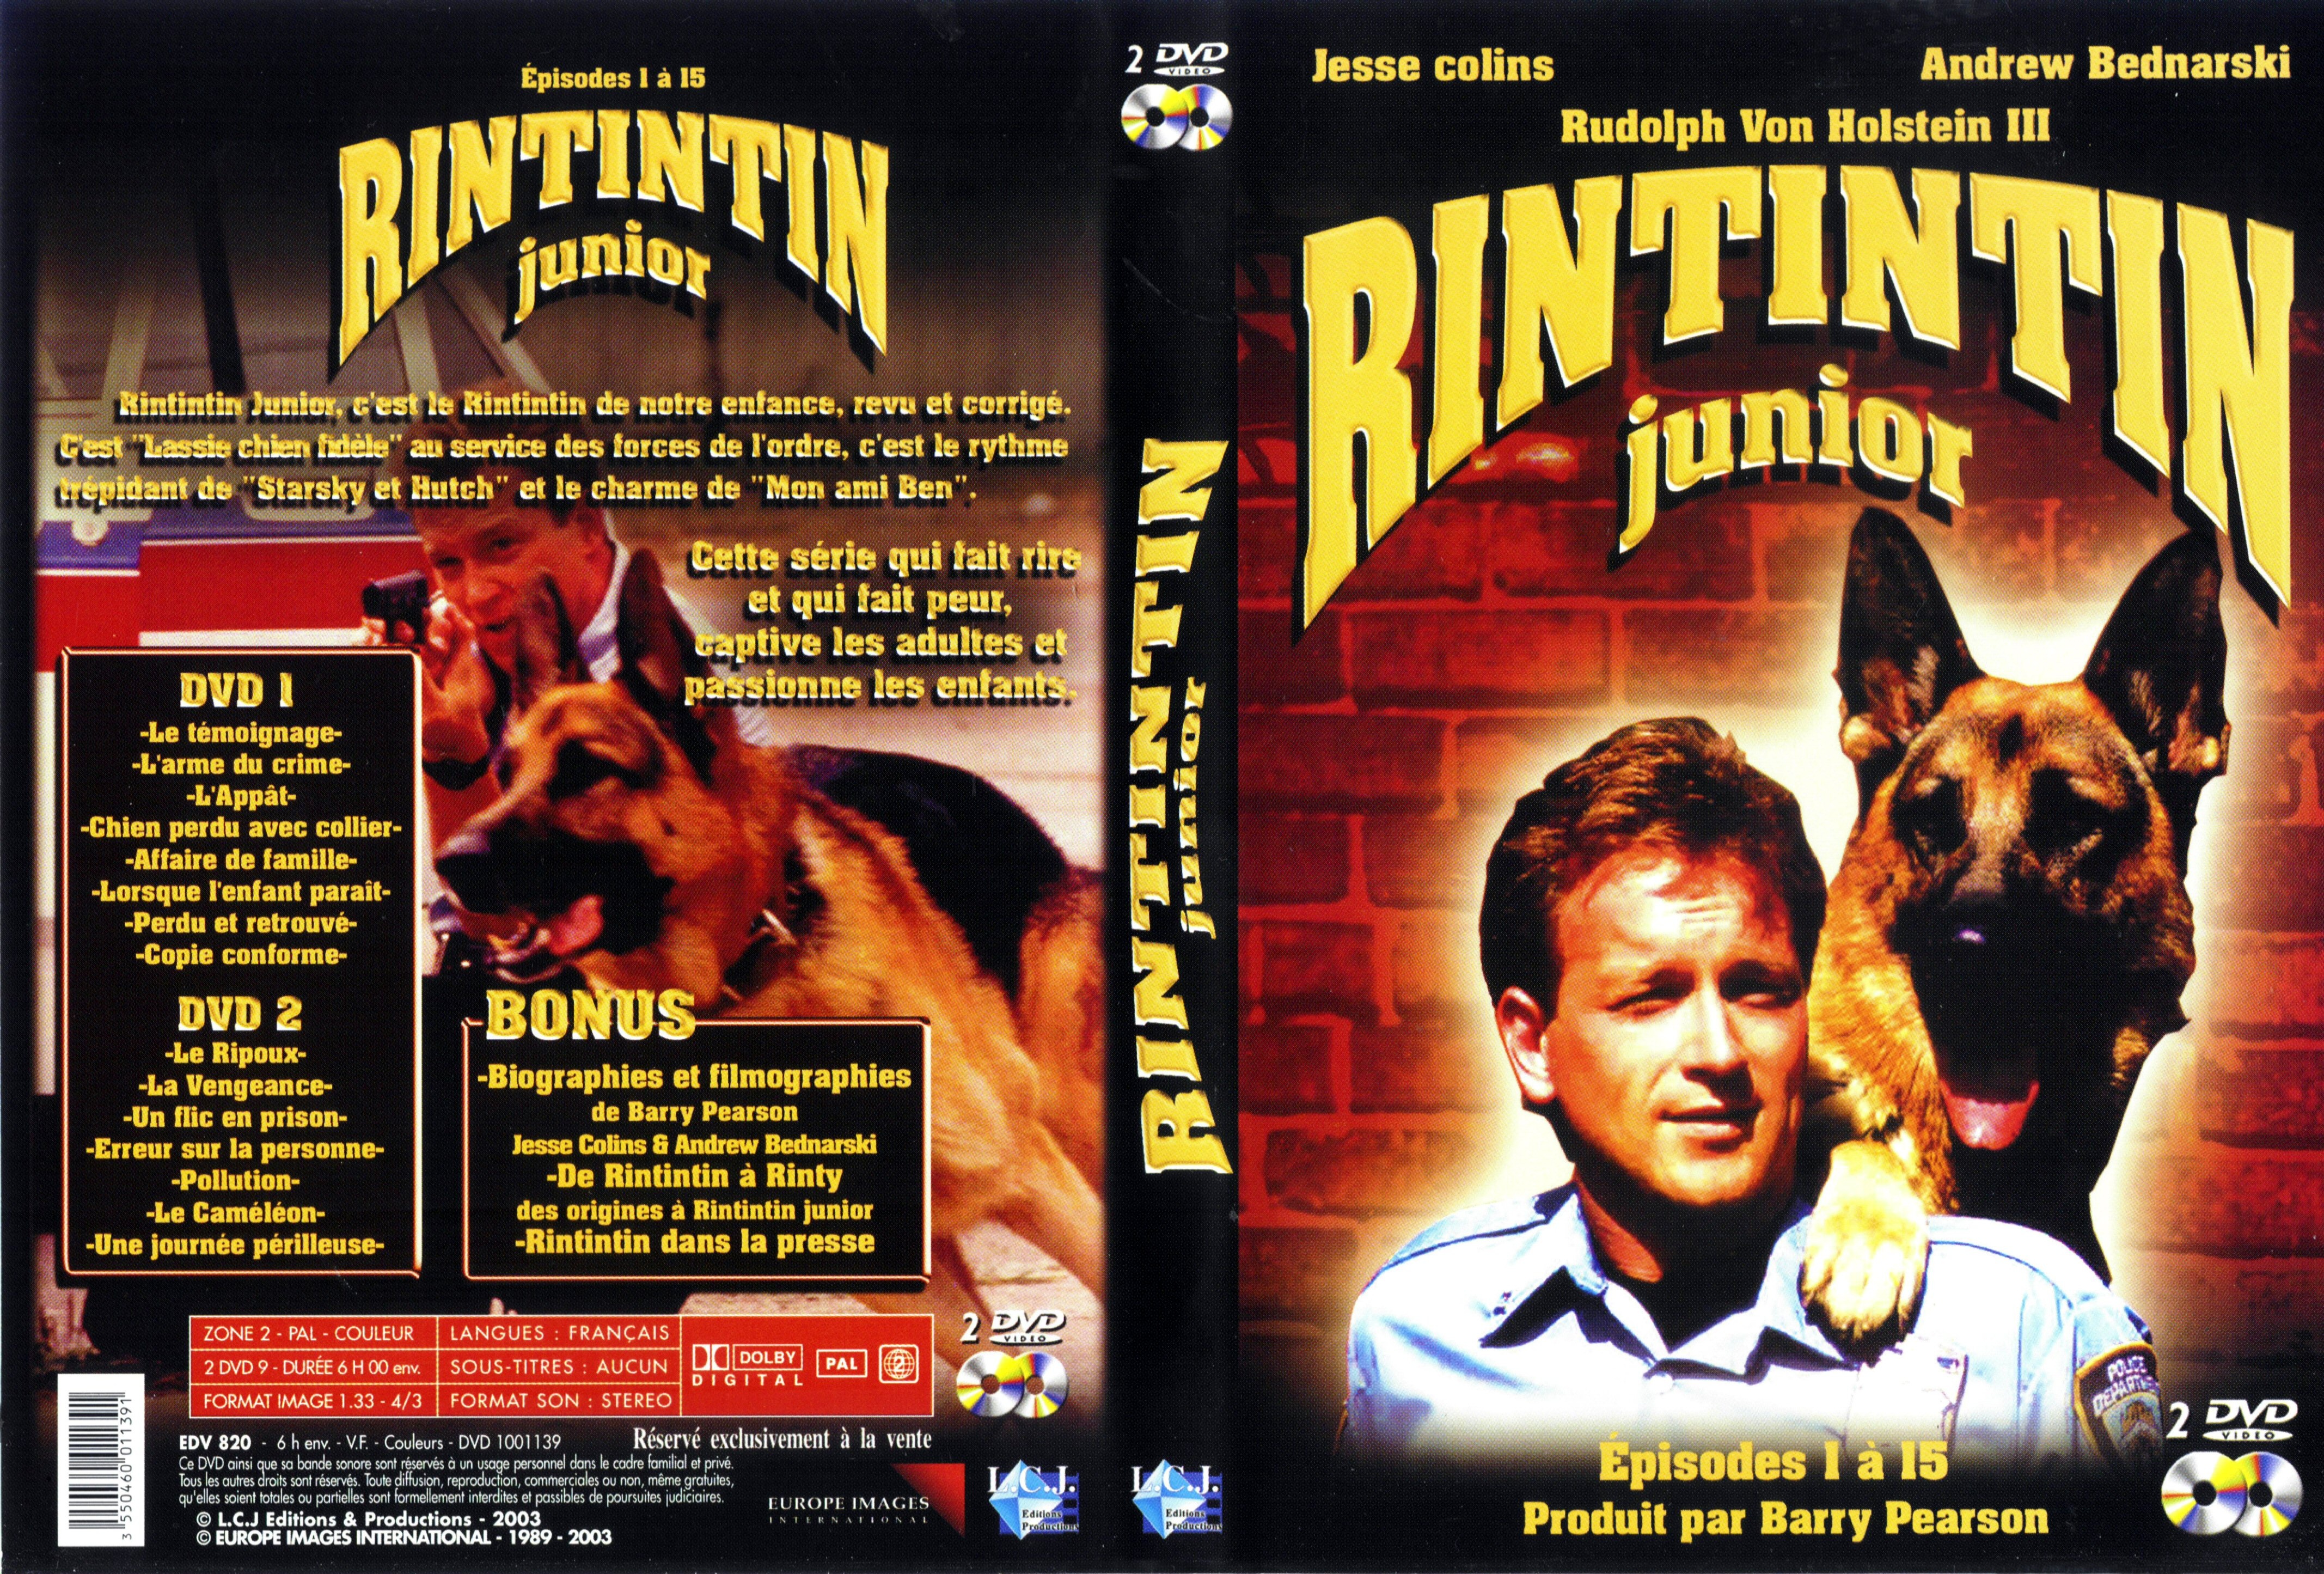 Jaquette DVD Rintintin Junior vol 1